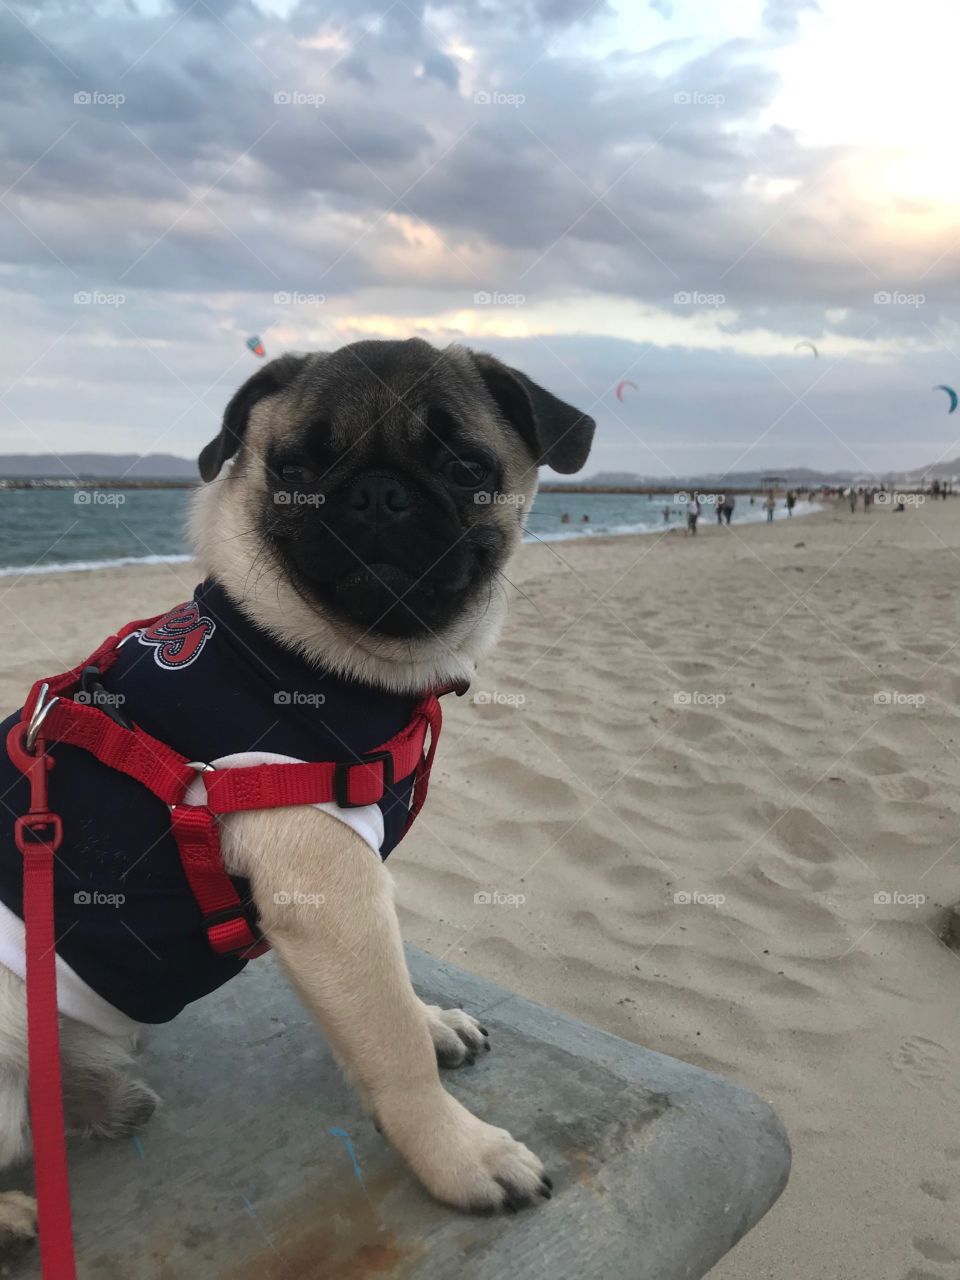 Pug carlino, Dog, nature, beach, playa, cielo, sand, relax